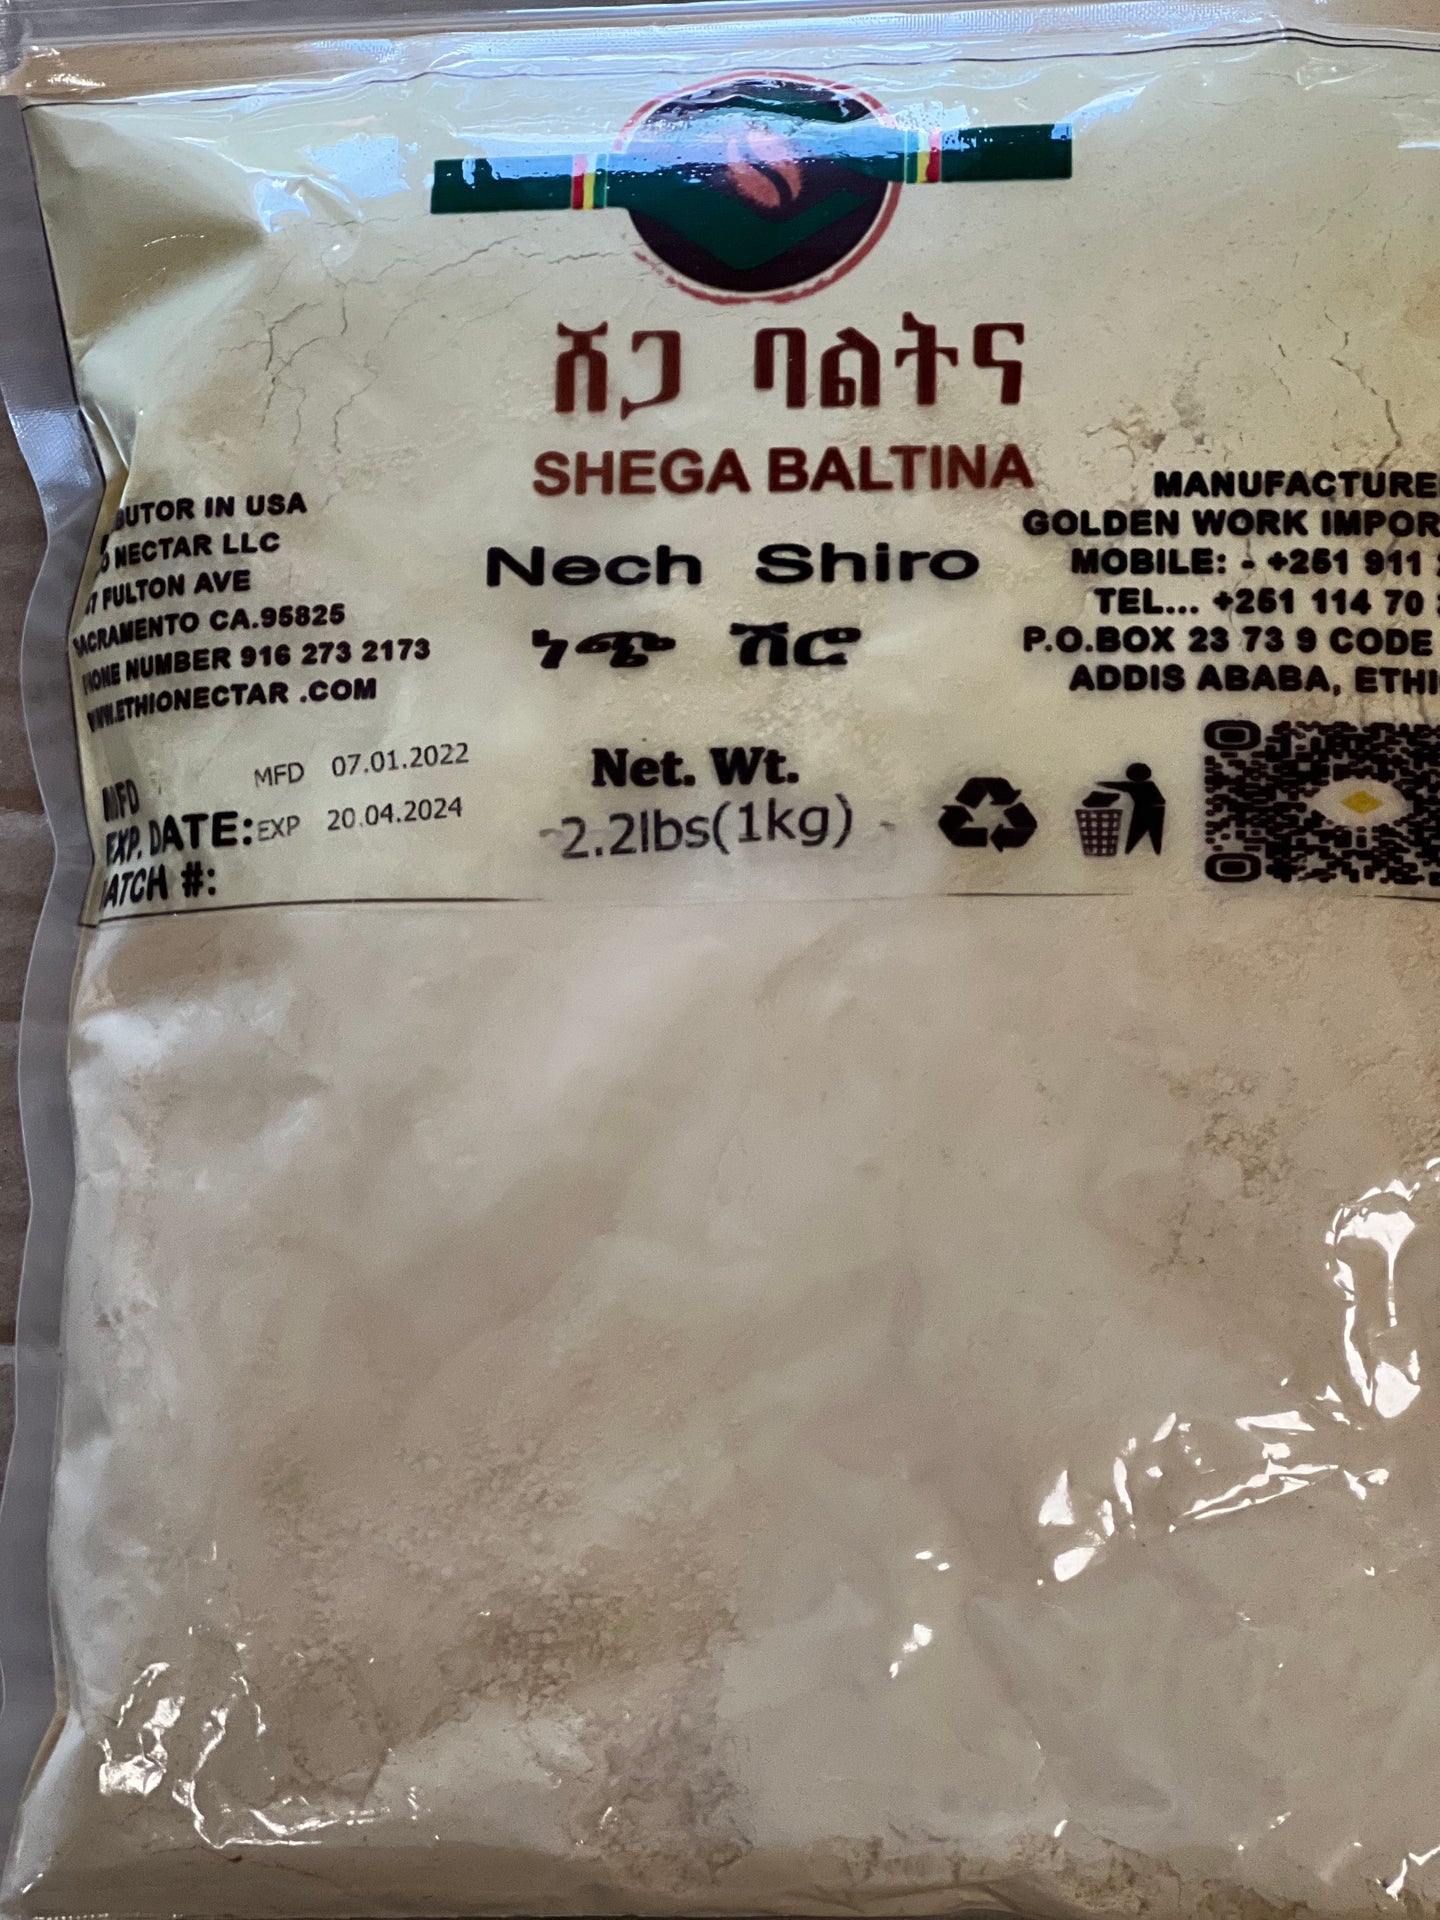 NECH SHIRO/ETHIOPIAN SPICE